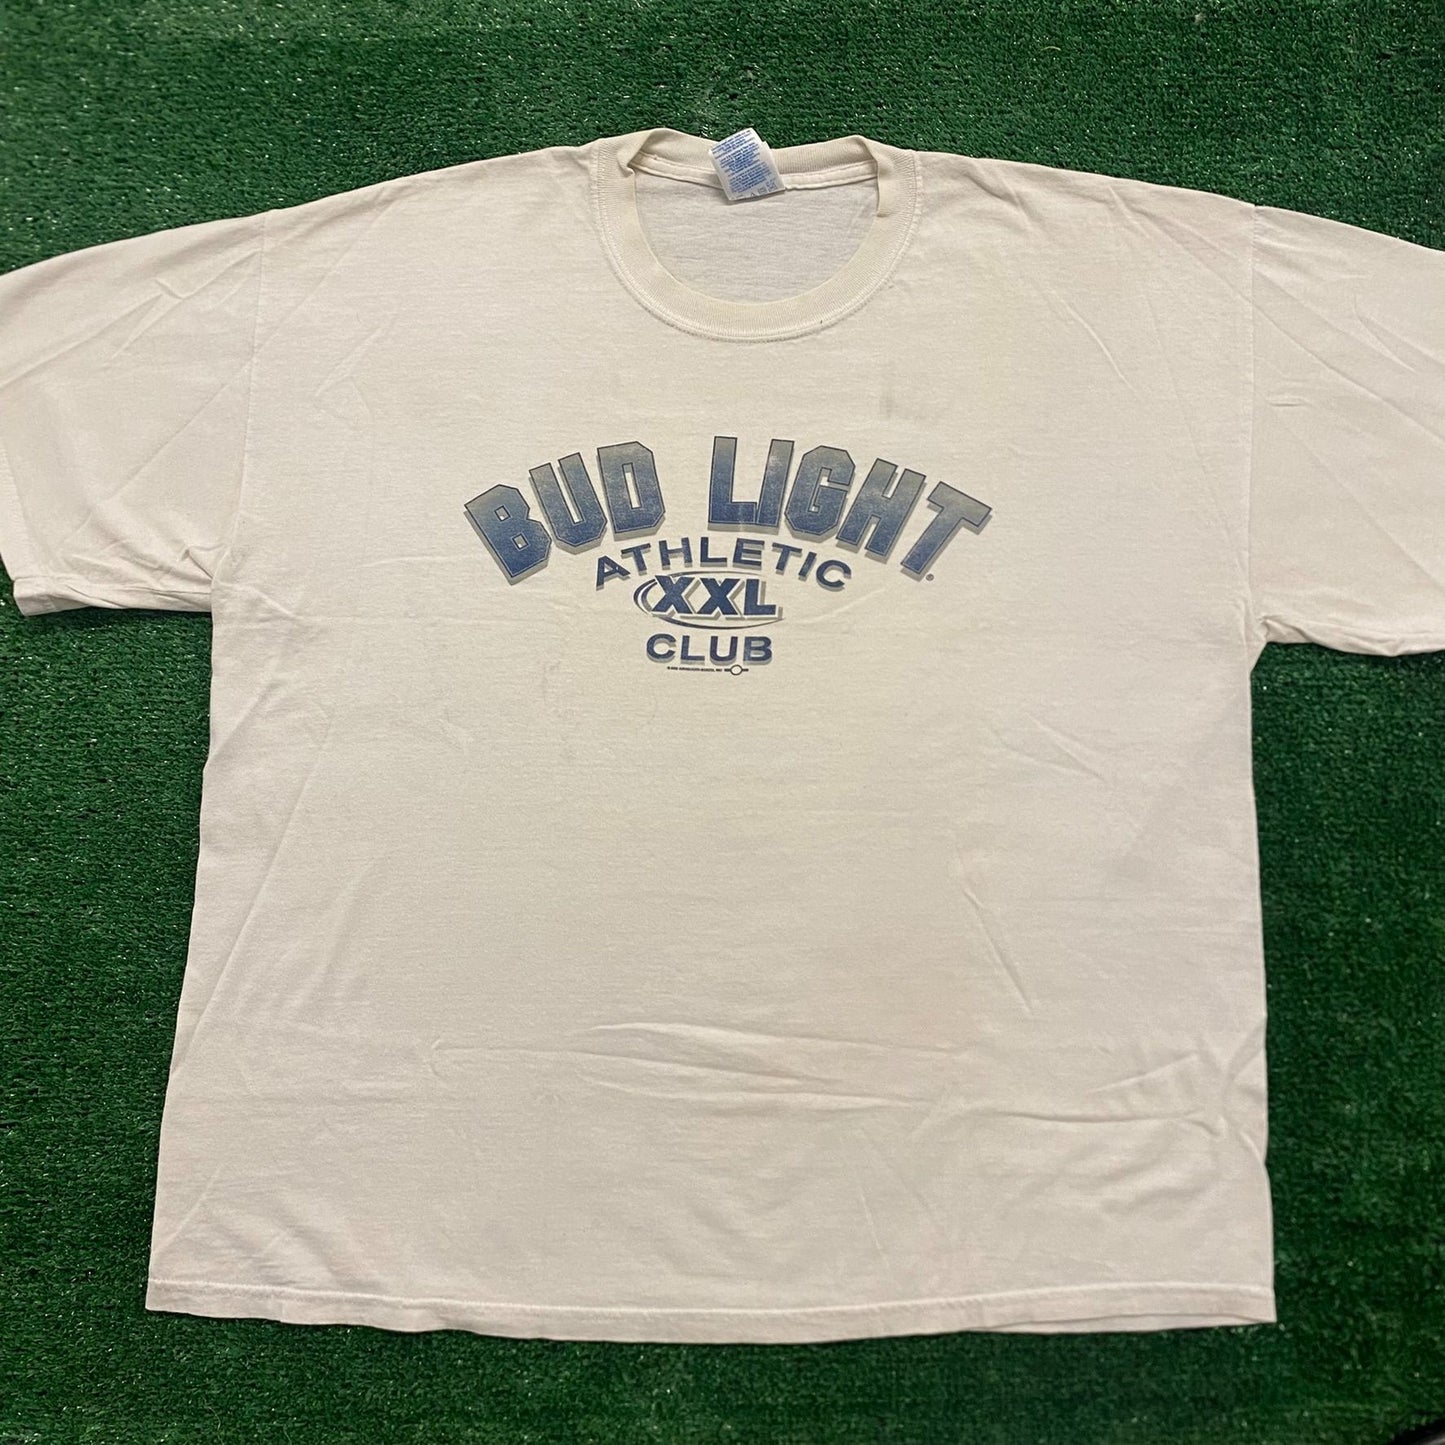 Bud Light Athletic Club Vintage 90s Beer T-Shirt